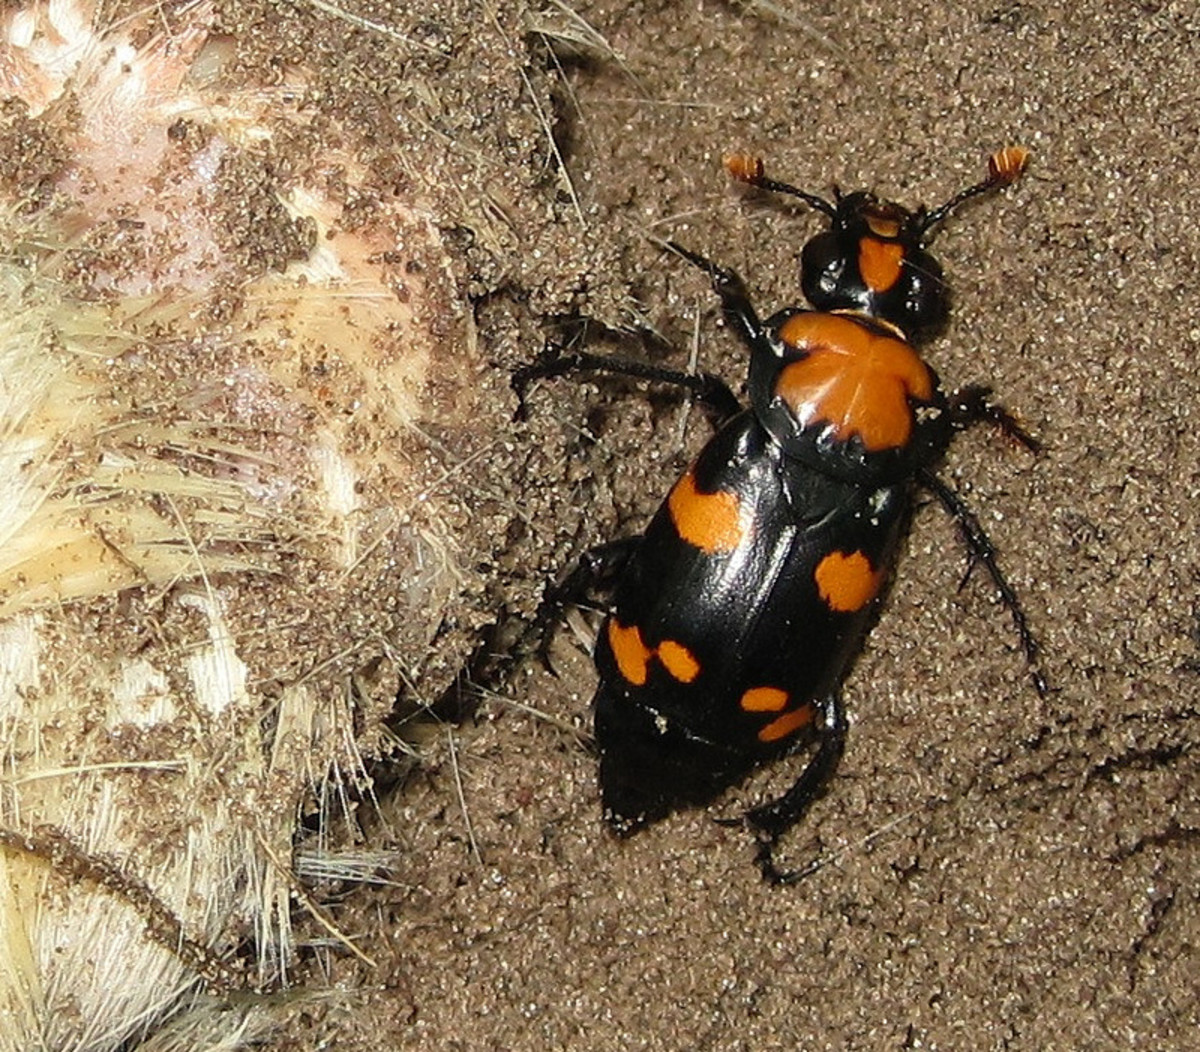 American Burying Beetle drawn to a dead mammal